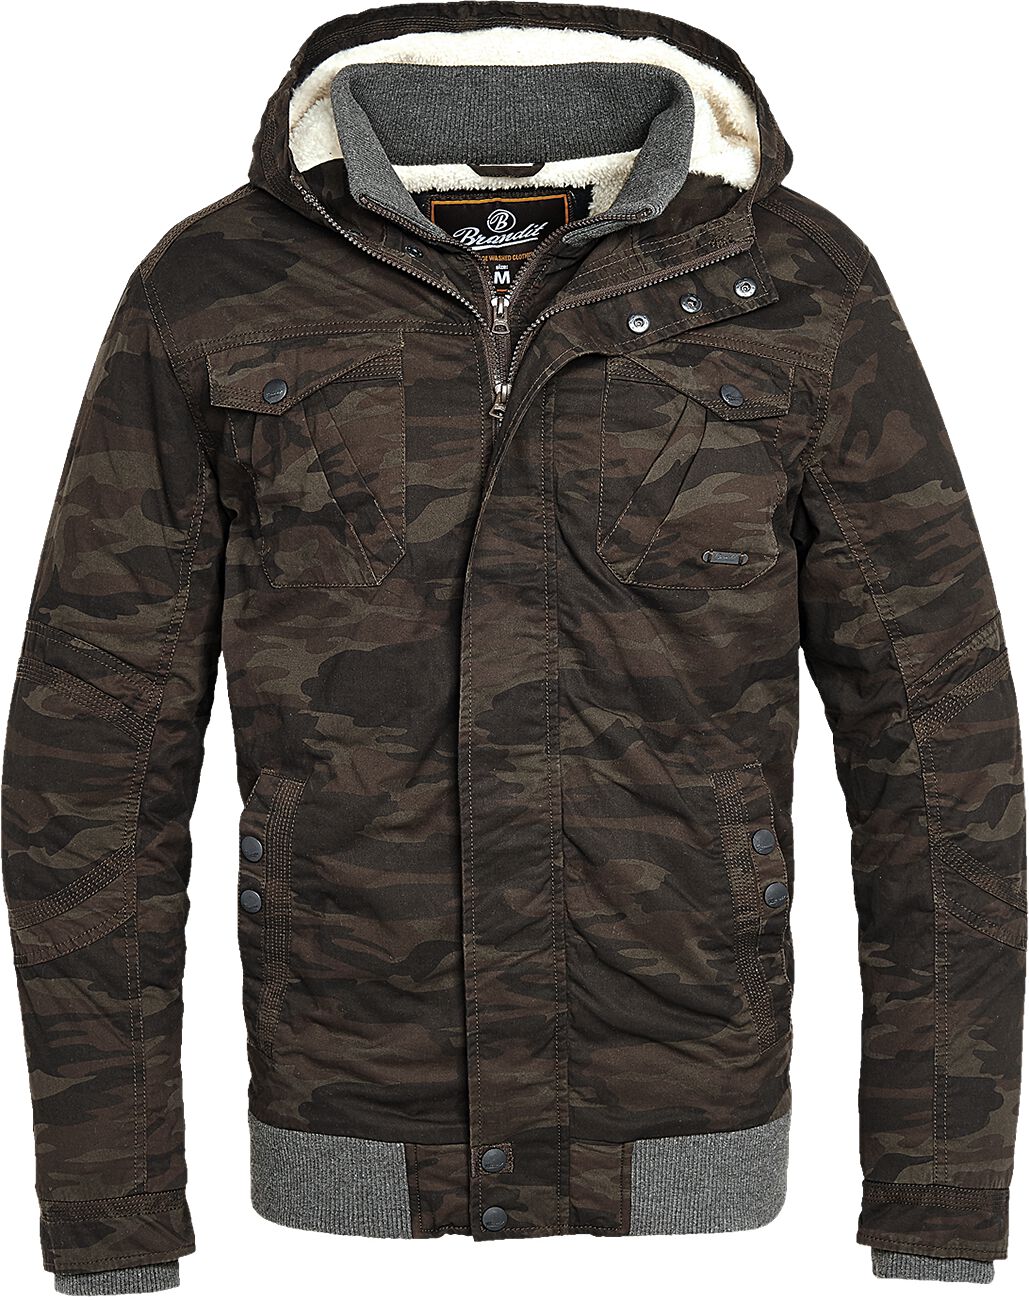 Brandit Parkmont Jacket Winterjacke camouflage